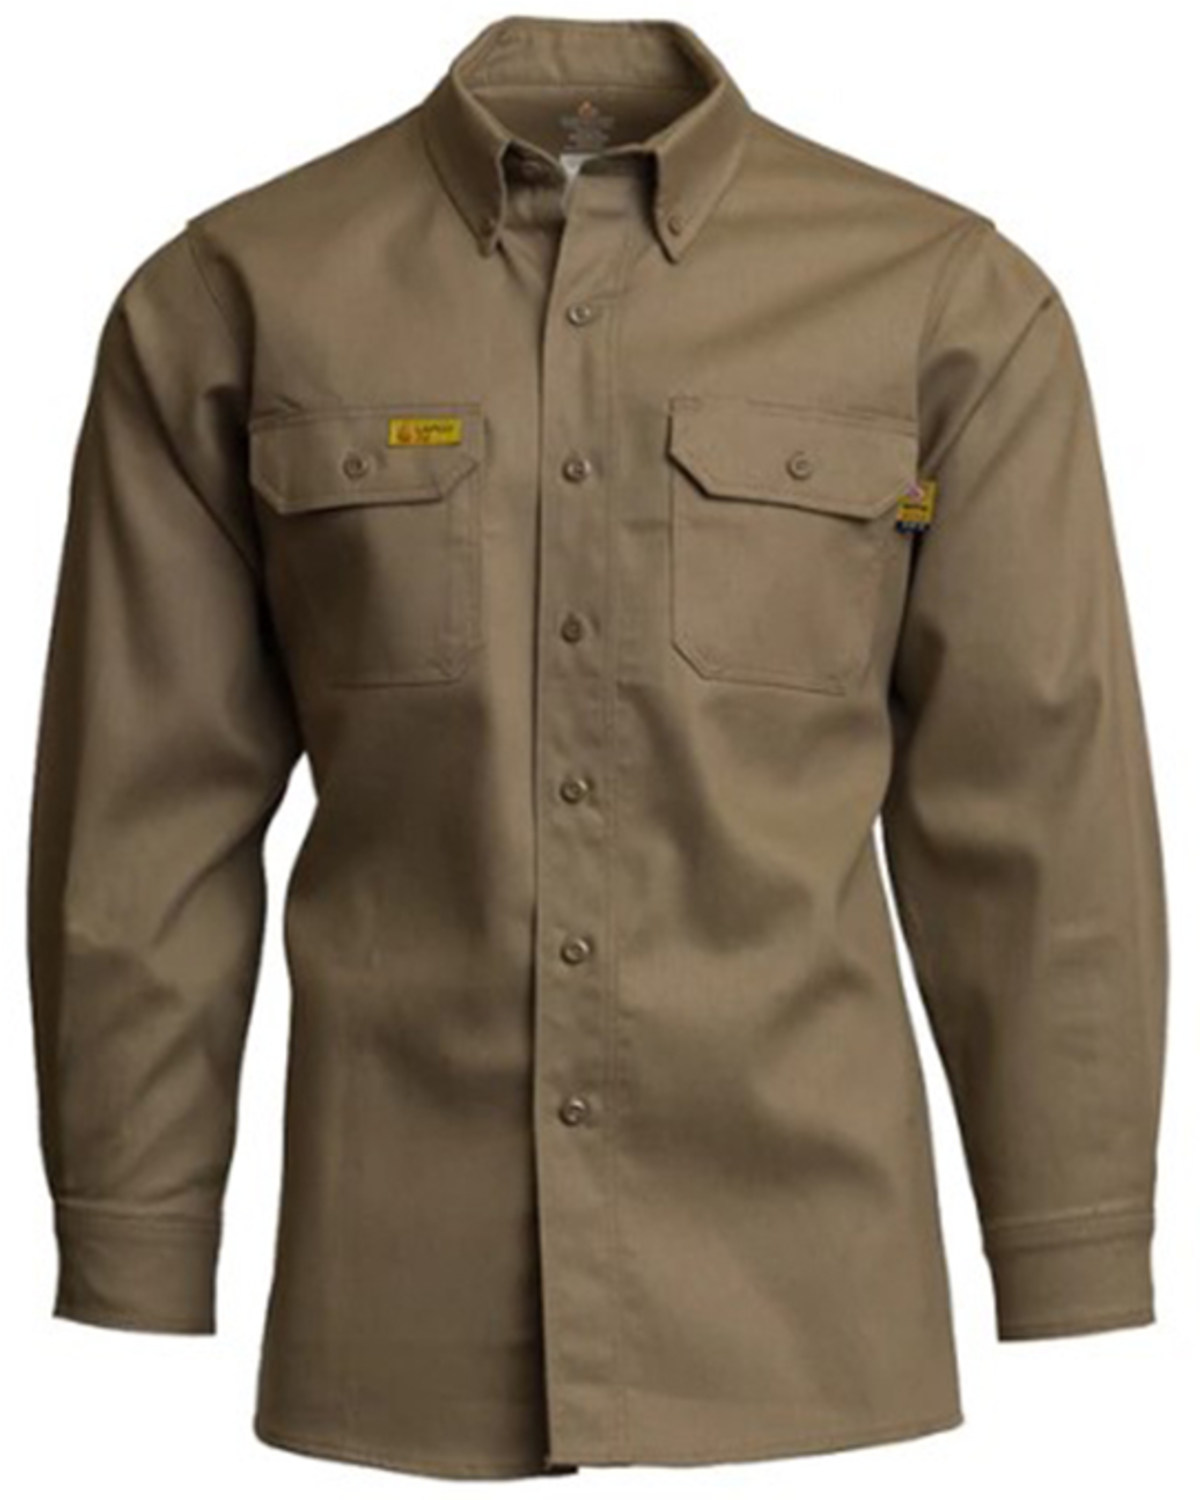 Lapco Men's Solid FR Long Sleeve Uniform Work Shirt - Big